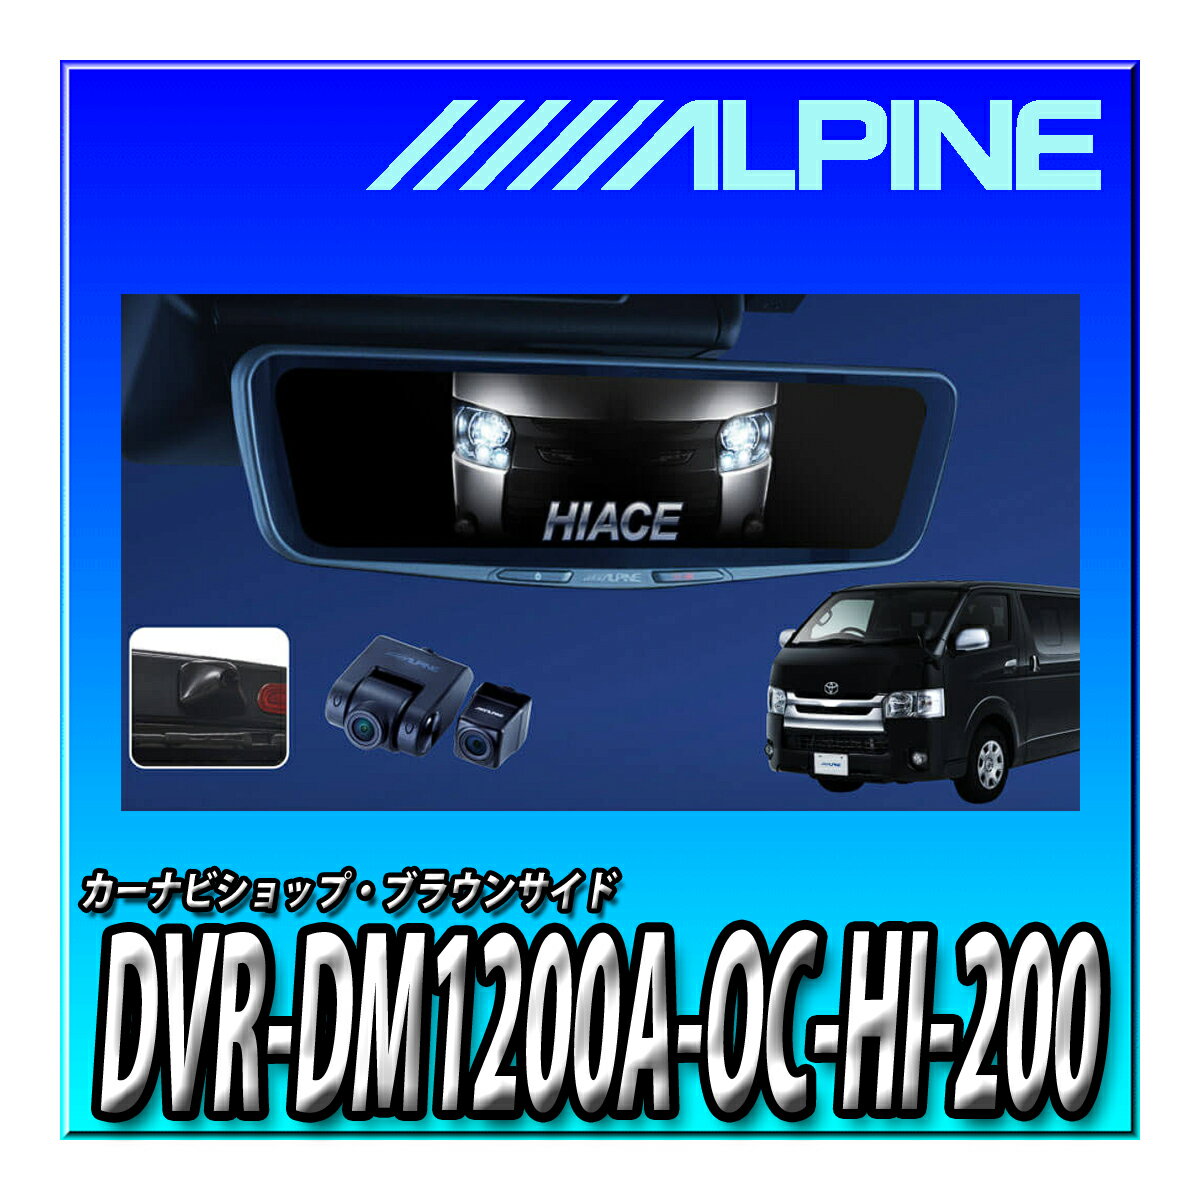 DVR-DM1200A-OC-HI-200 アルパイン(ALPINE) ハイエース(2013.12-現在)専用 ドライブレコーダー搭載 12インチデジタルミラー